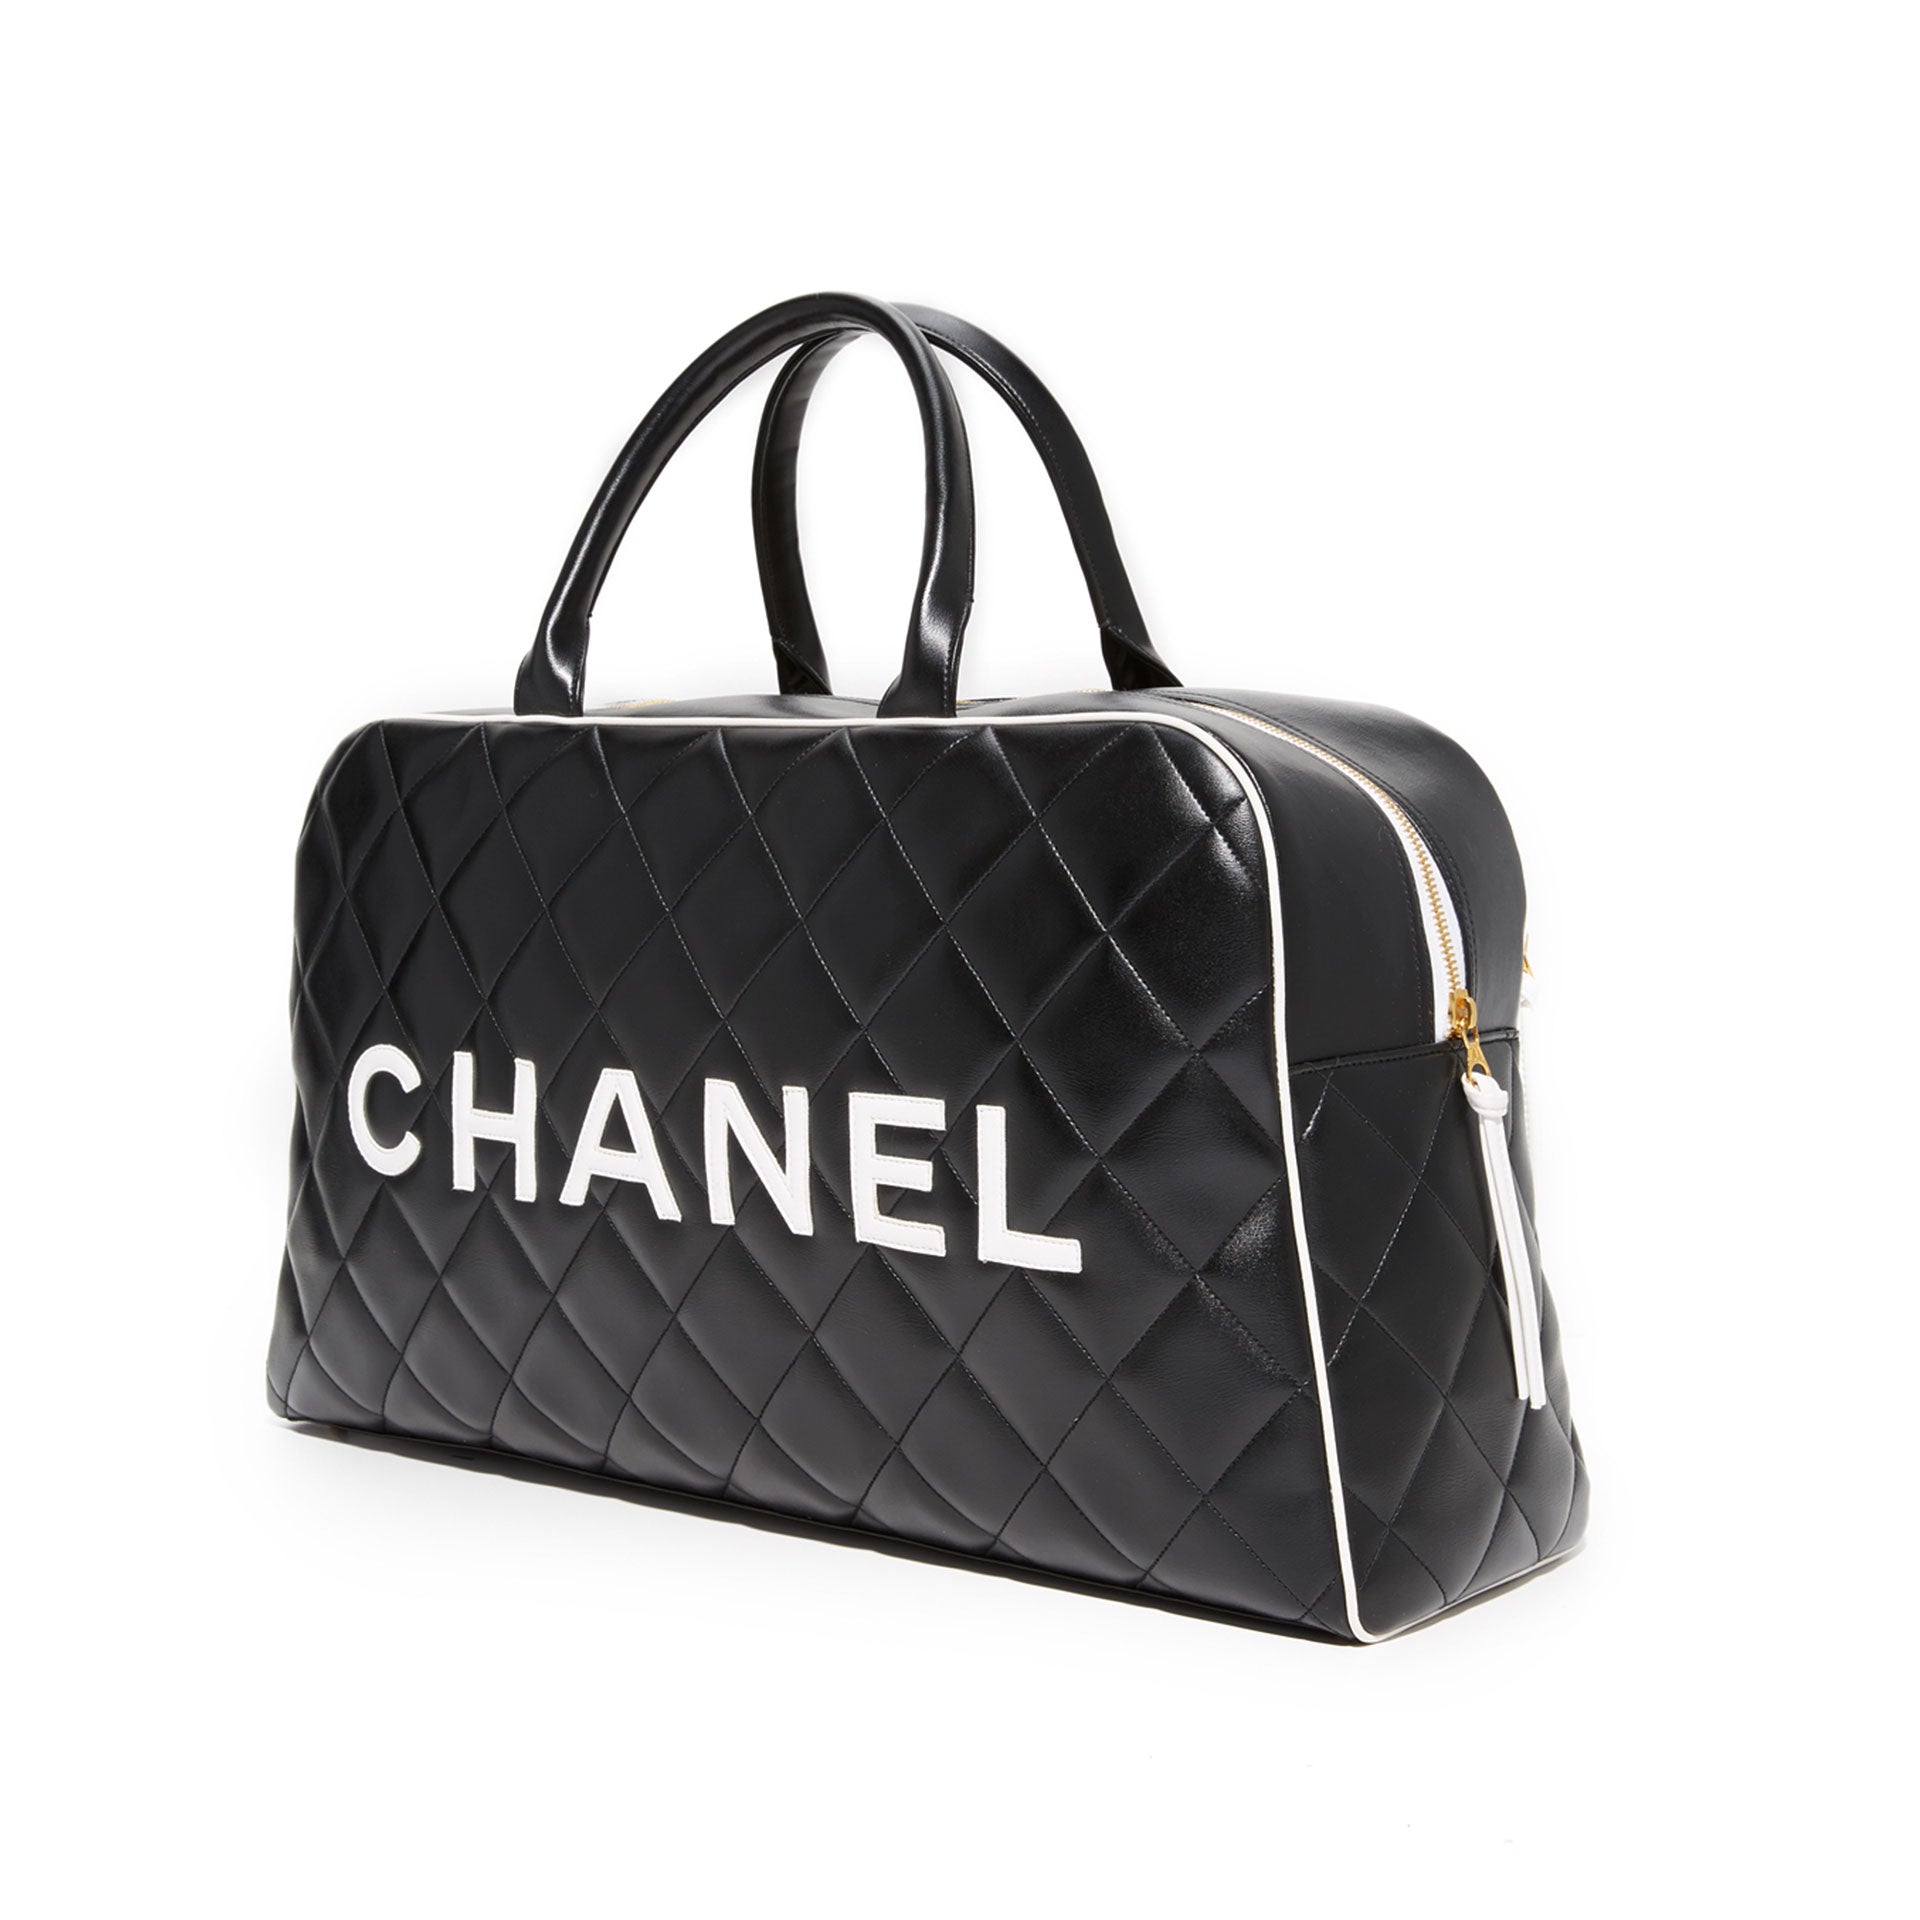 Chanel Black Caviar Leather Duffle Bag.  Luxury Accessories